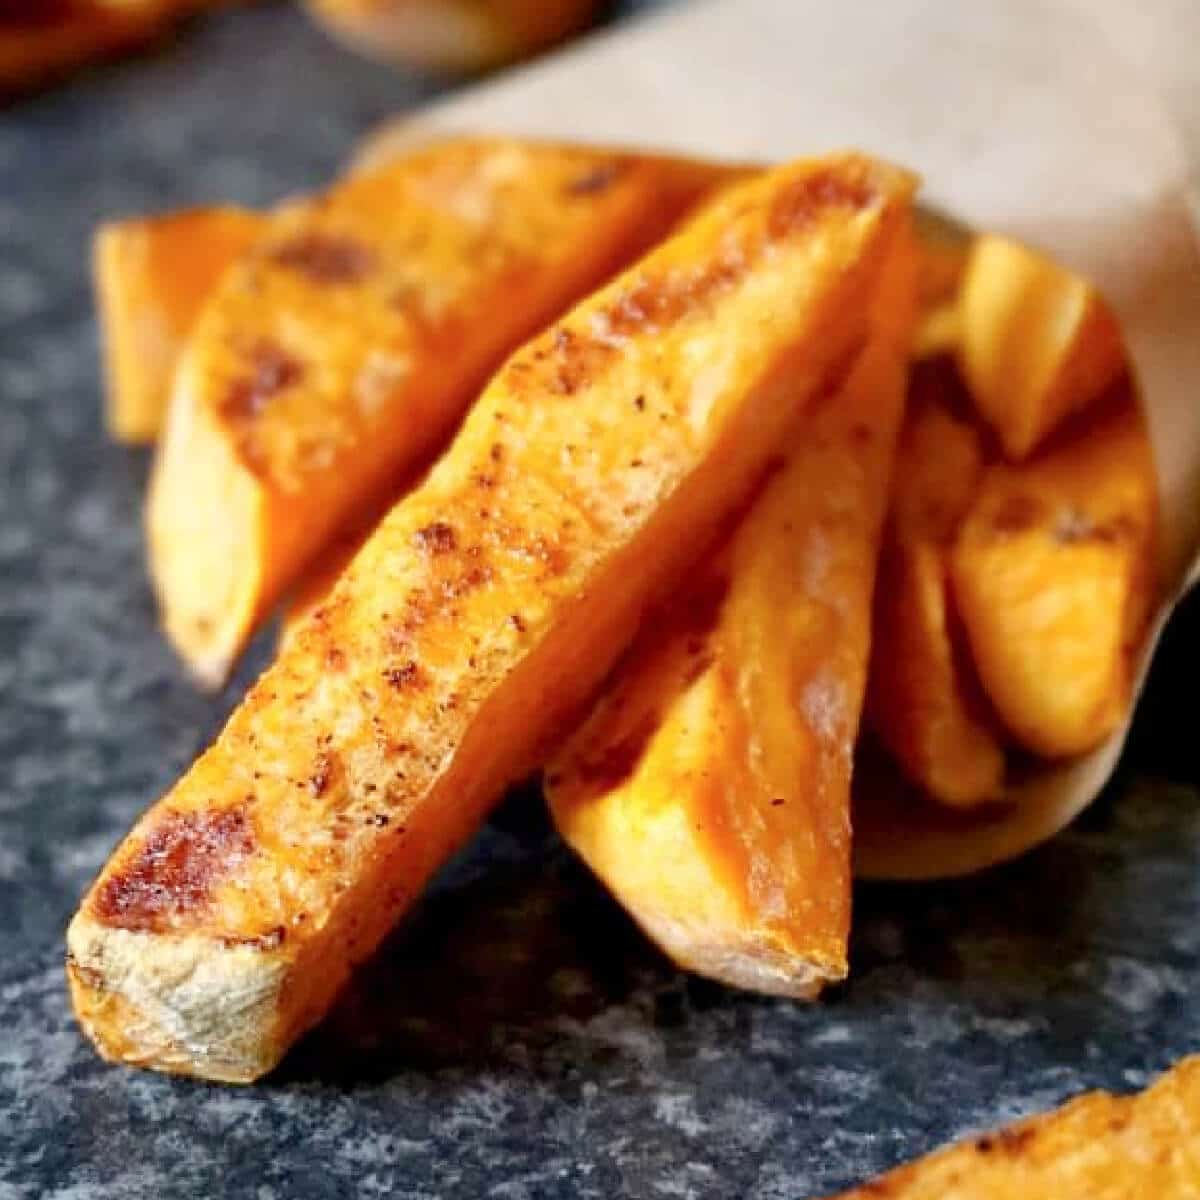 https://www.mygorgeousrecipes.com/wp-content/uploads/2018/04/Crispy-Baked-Sweet-Potato-Fries-3.jpg